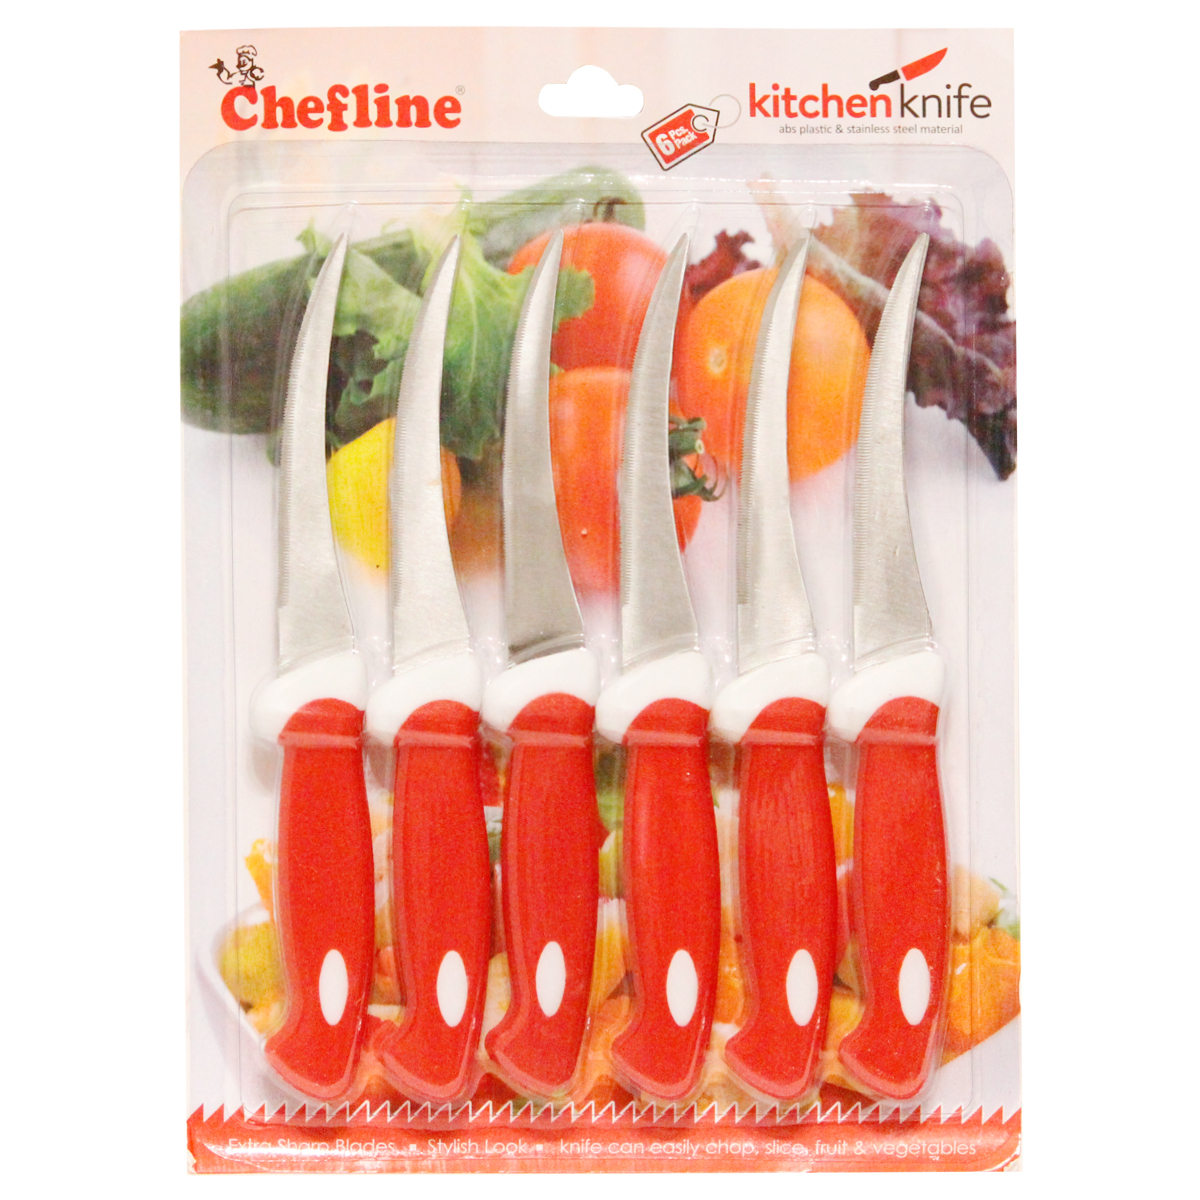 Chefline Kitchen Knife 8" 6pc